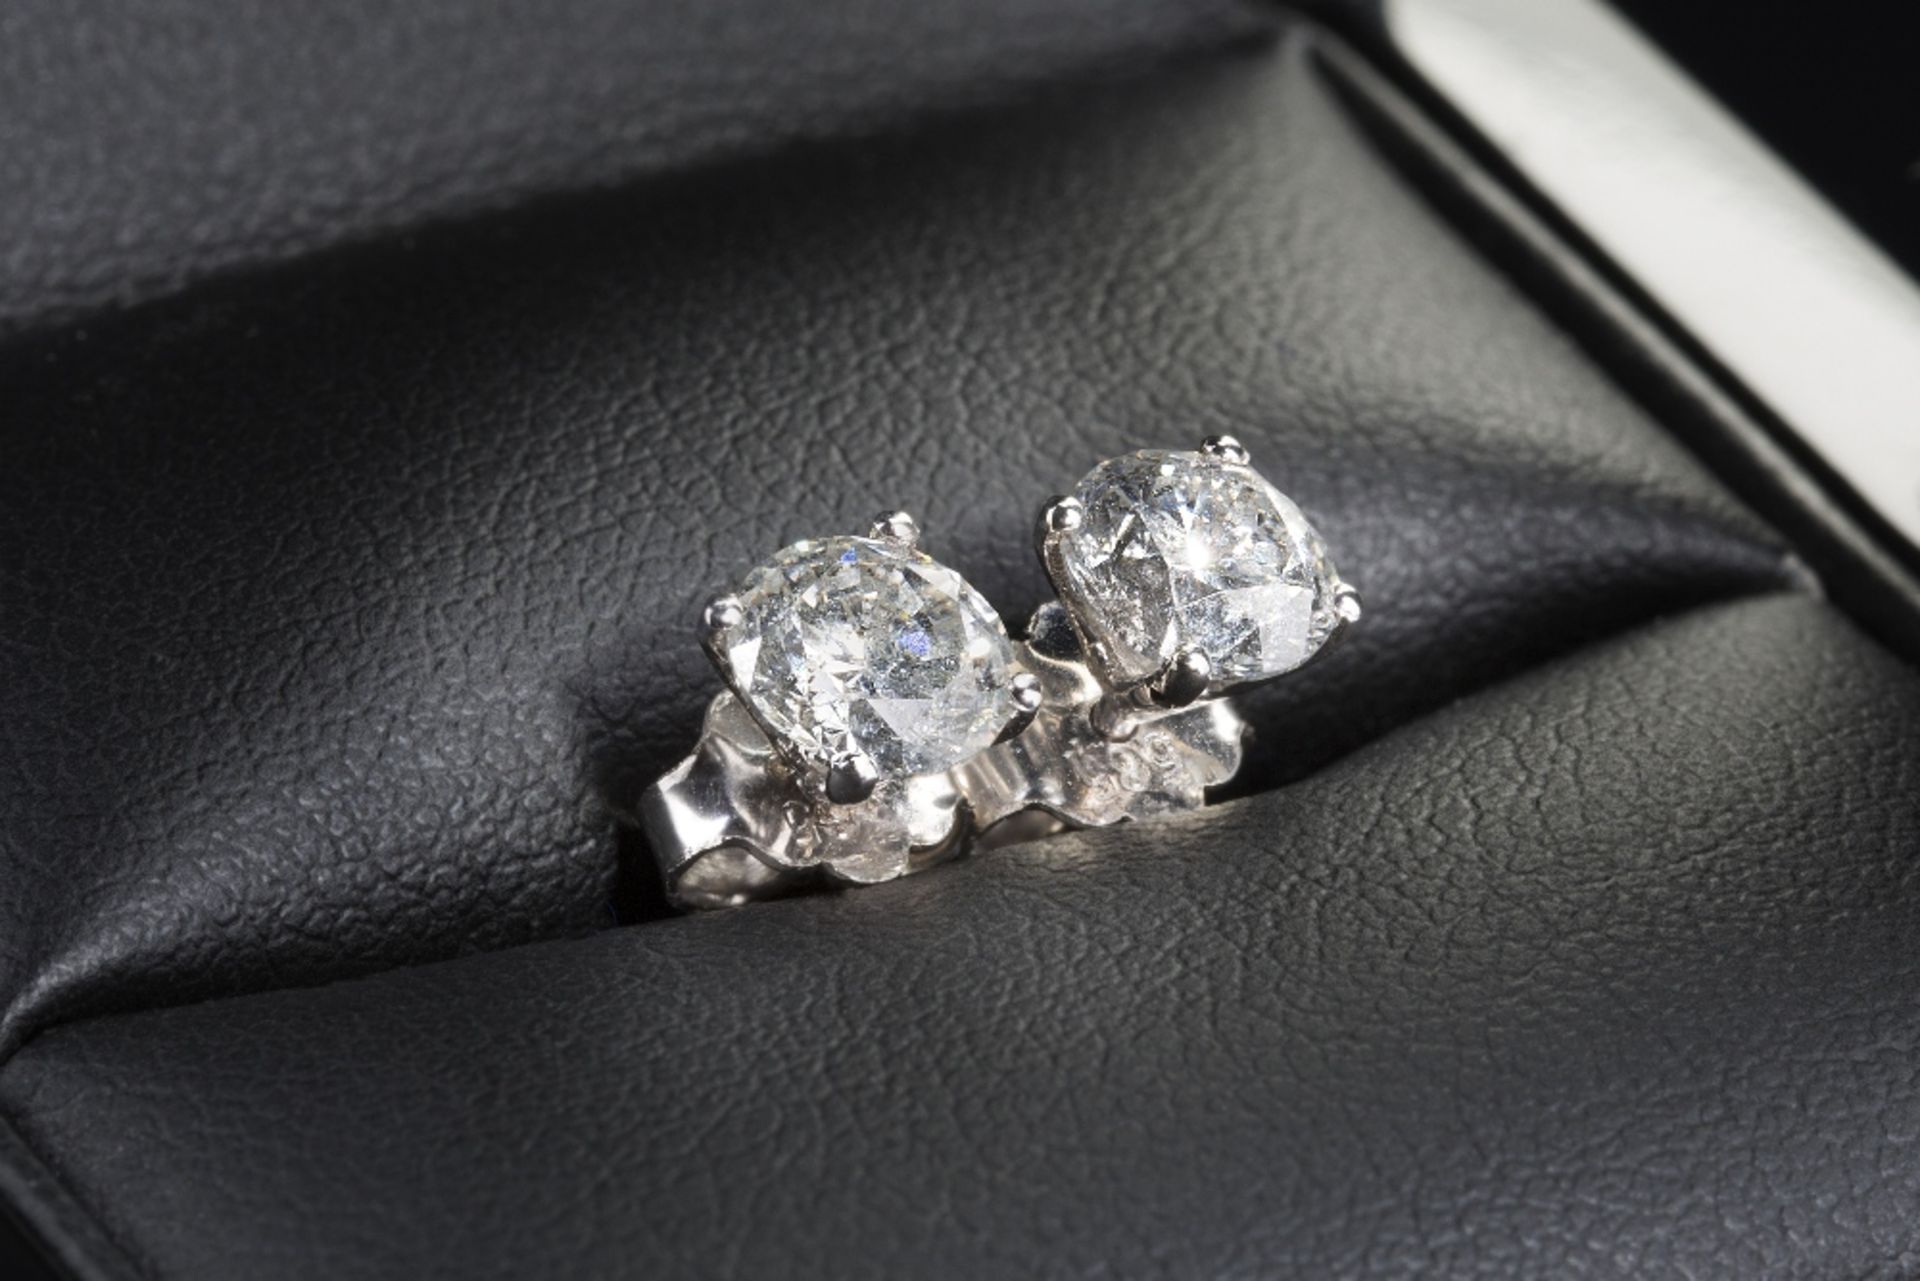 A New Pair of 1.57 ct Diamond Earrings D-E Colour Grade, SI1-SI2 Clarity Grade On a 14K Hallmarked